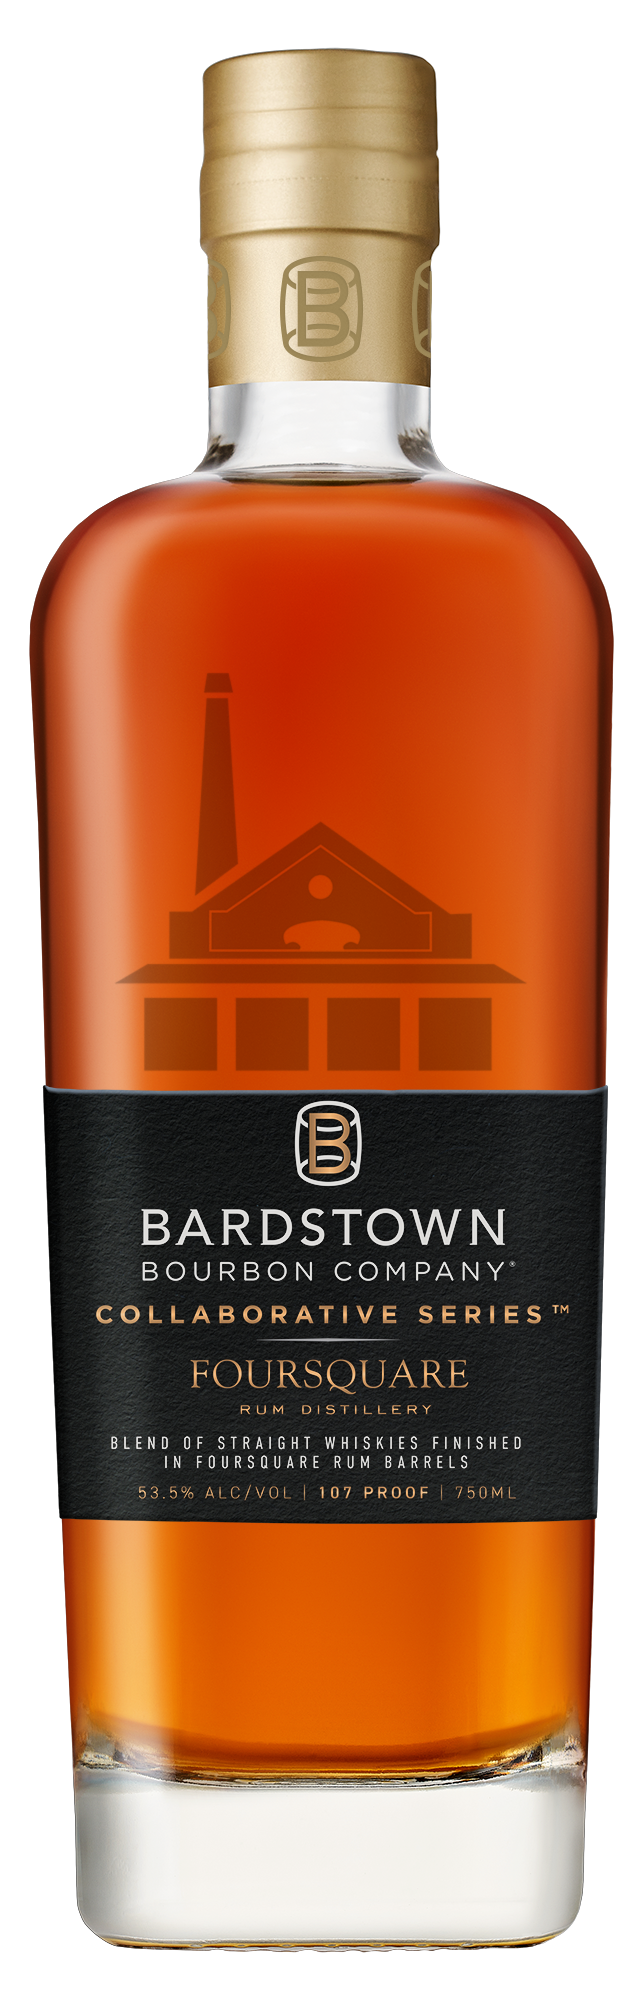 Bardstown Bourbon Company Collaborative Series Foursquare Rum